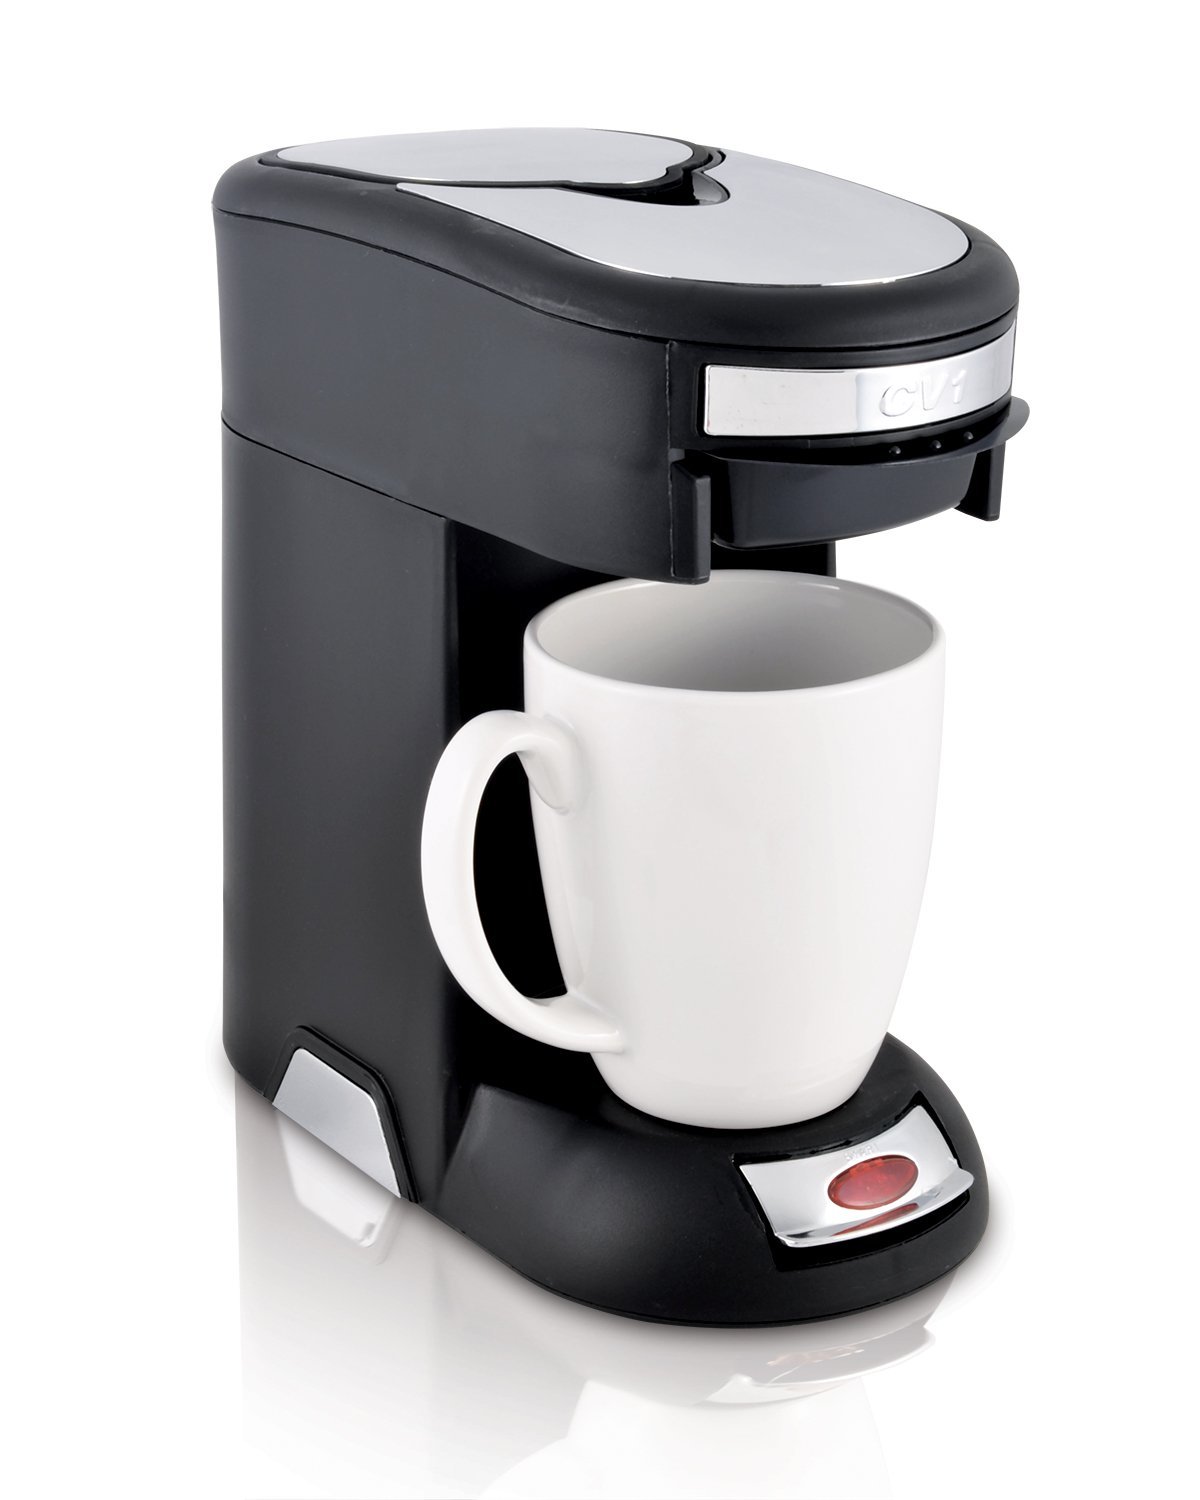 http://wonderfulengineering.com/wp-content/uploads/2015/11/10-Best-Coffee-Machines-for-Dorm-4.jpg